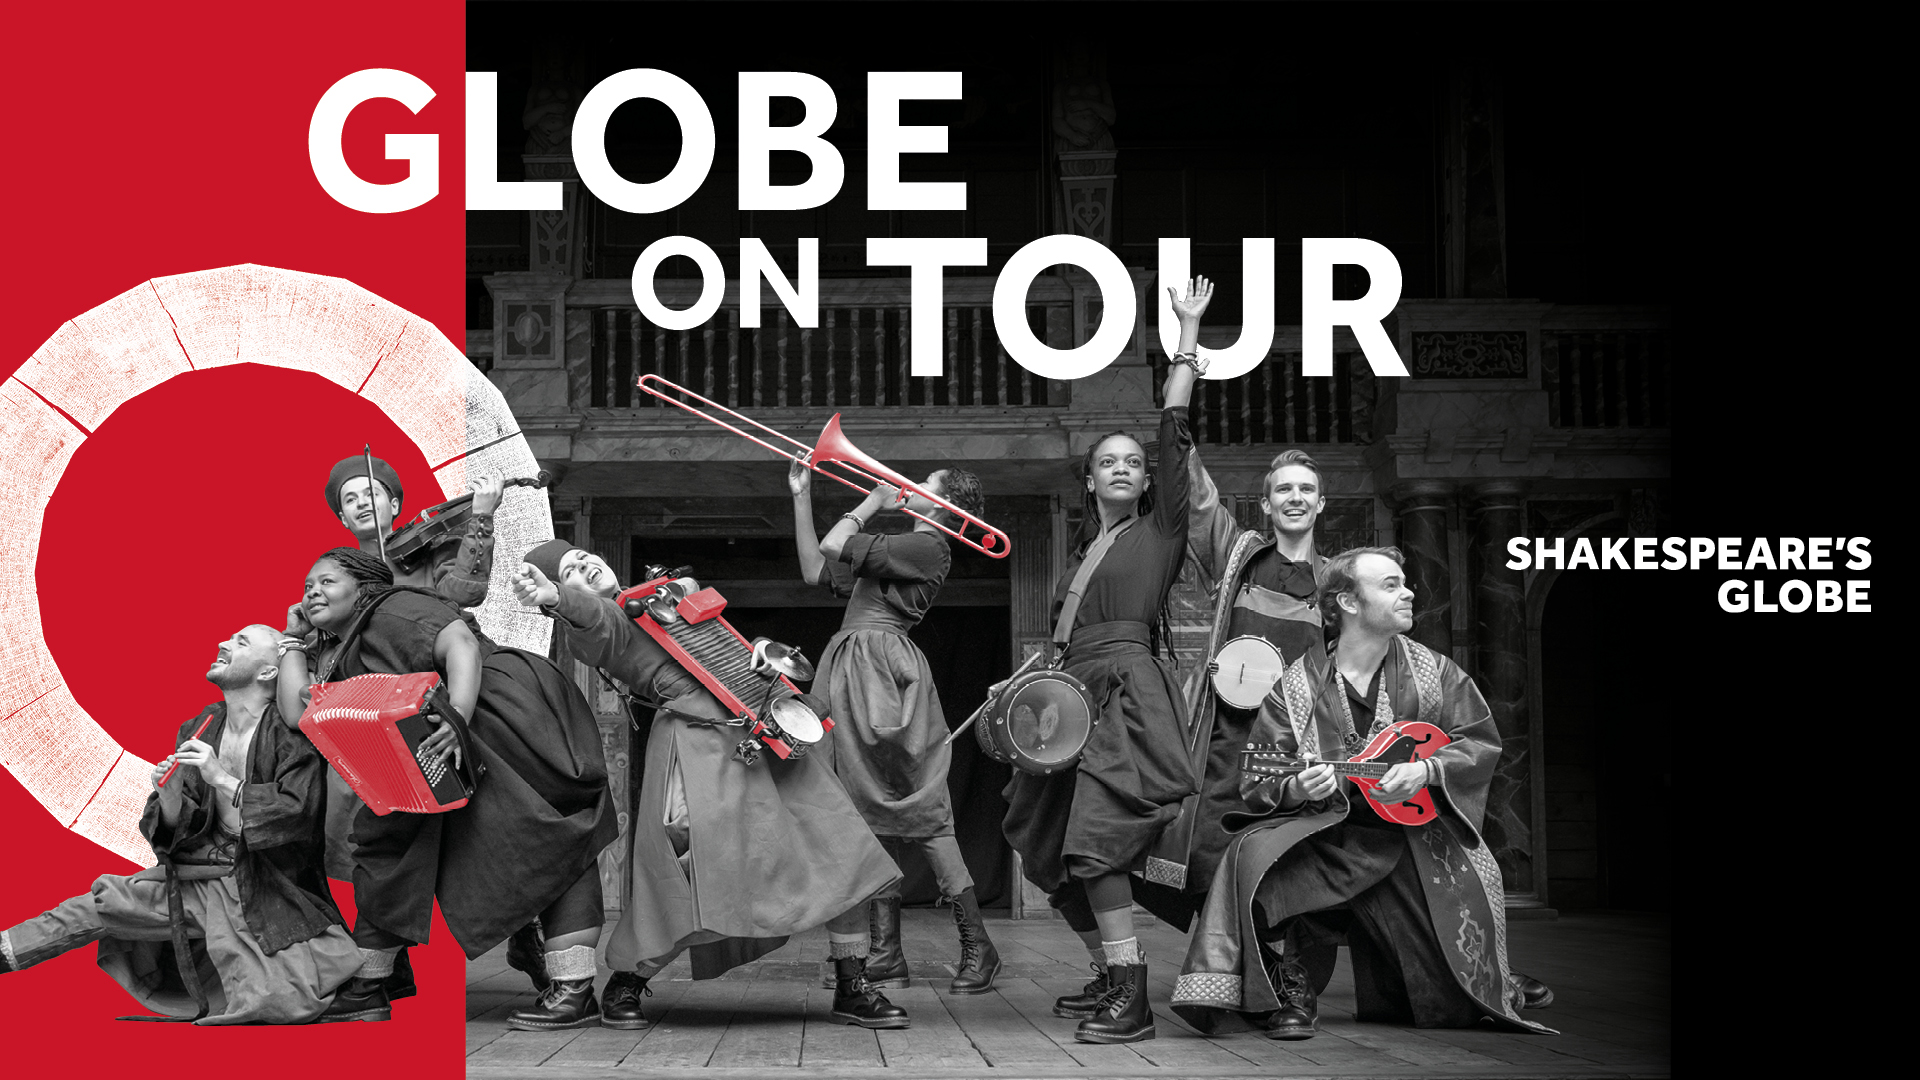 The cast of Shakespeare's Globe Touring Ensemble